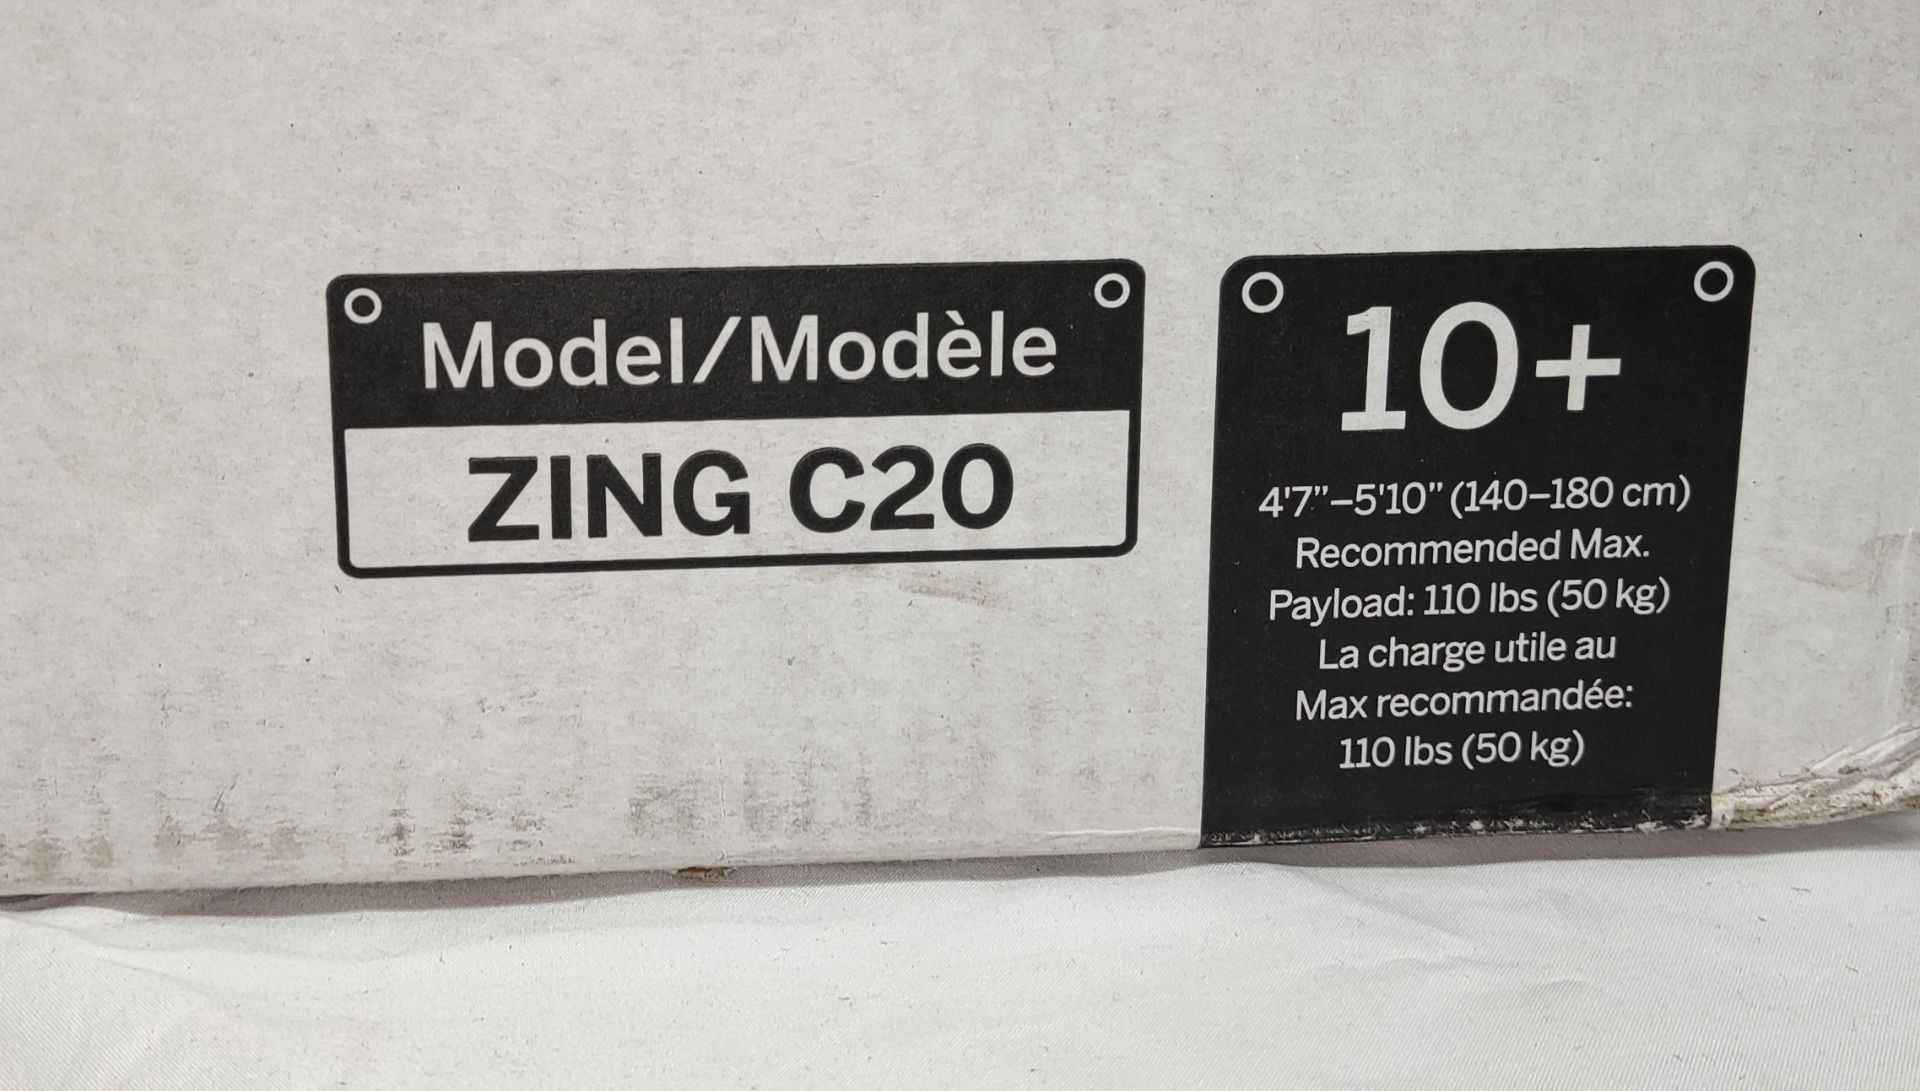 1 x SEGWAY Ninebot Zing C20 Grey Ekickscooter - Unused Boxed Stock - Original RRP £249.00 - Image 8 of 20